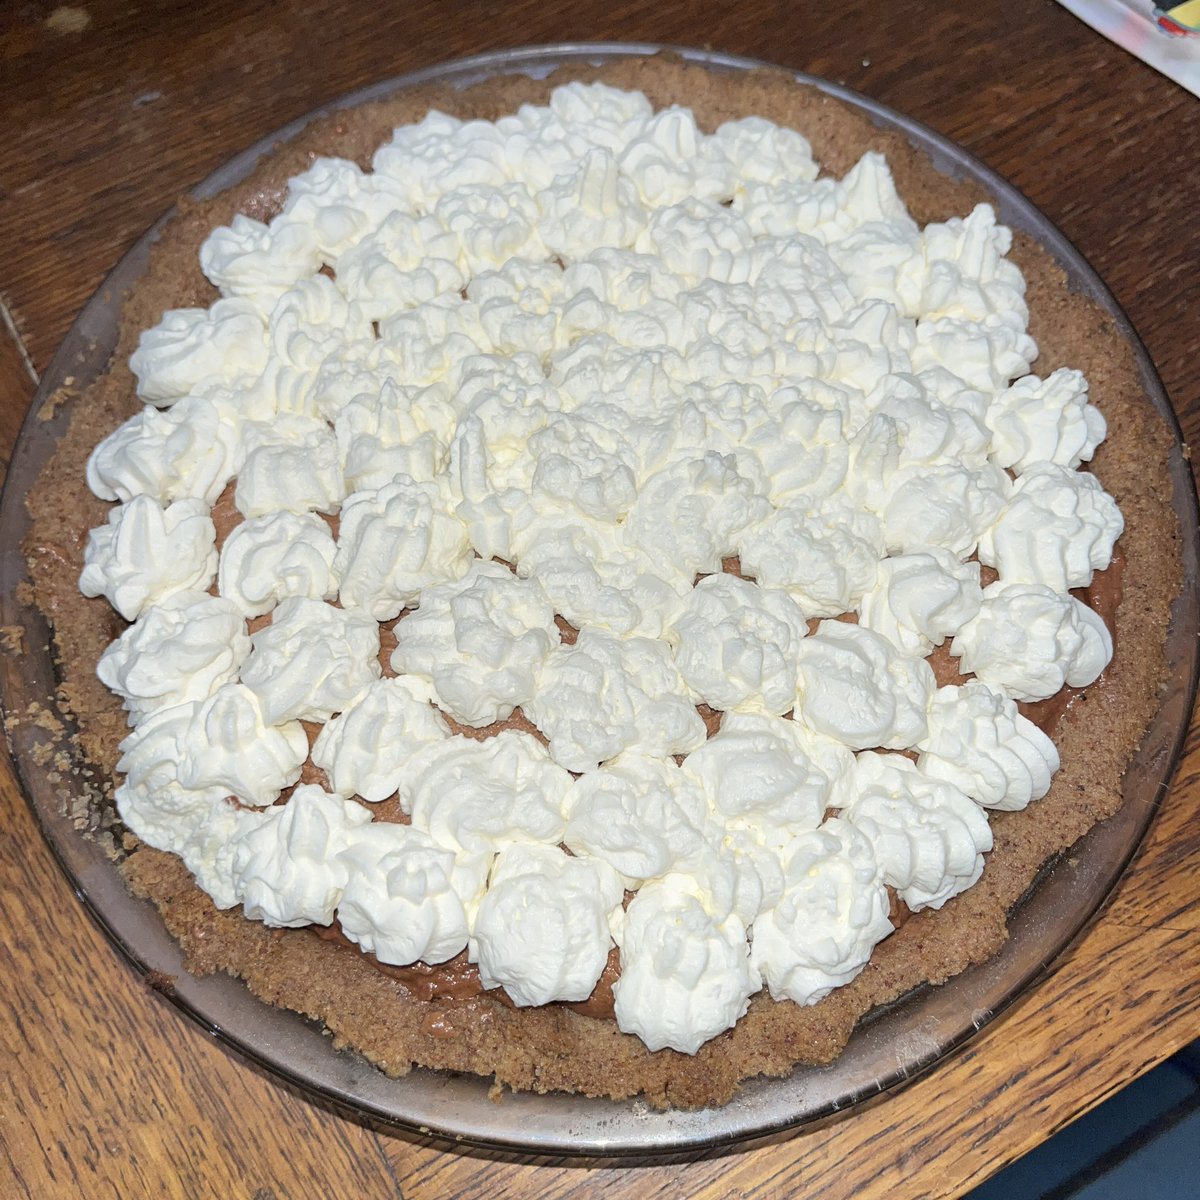 #Passover #FrenchSilkPie with pecan crust #pie #baking #foodcatspensbikes